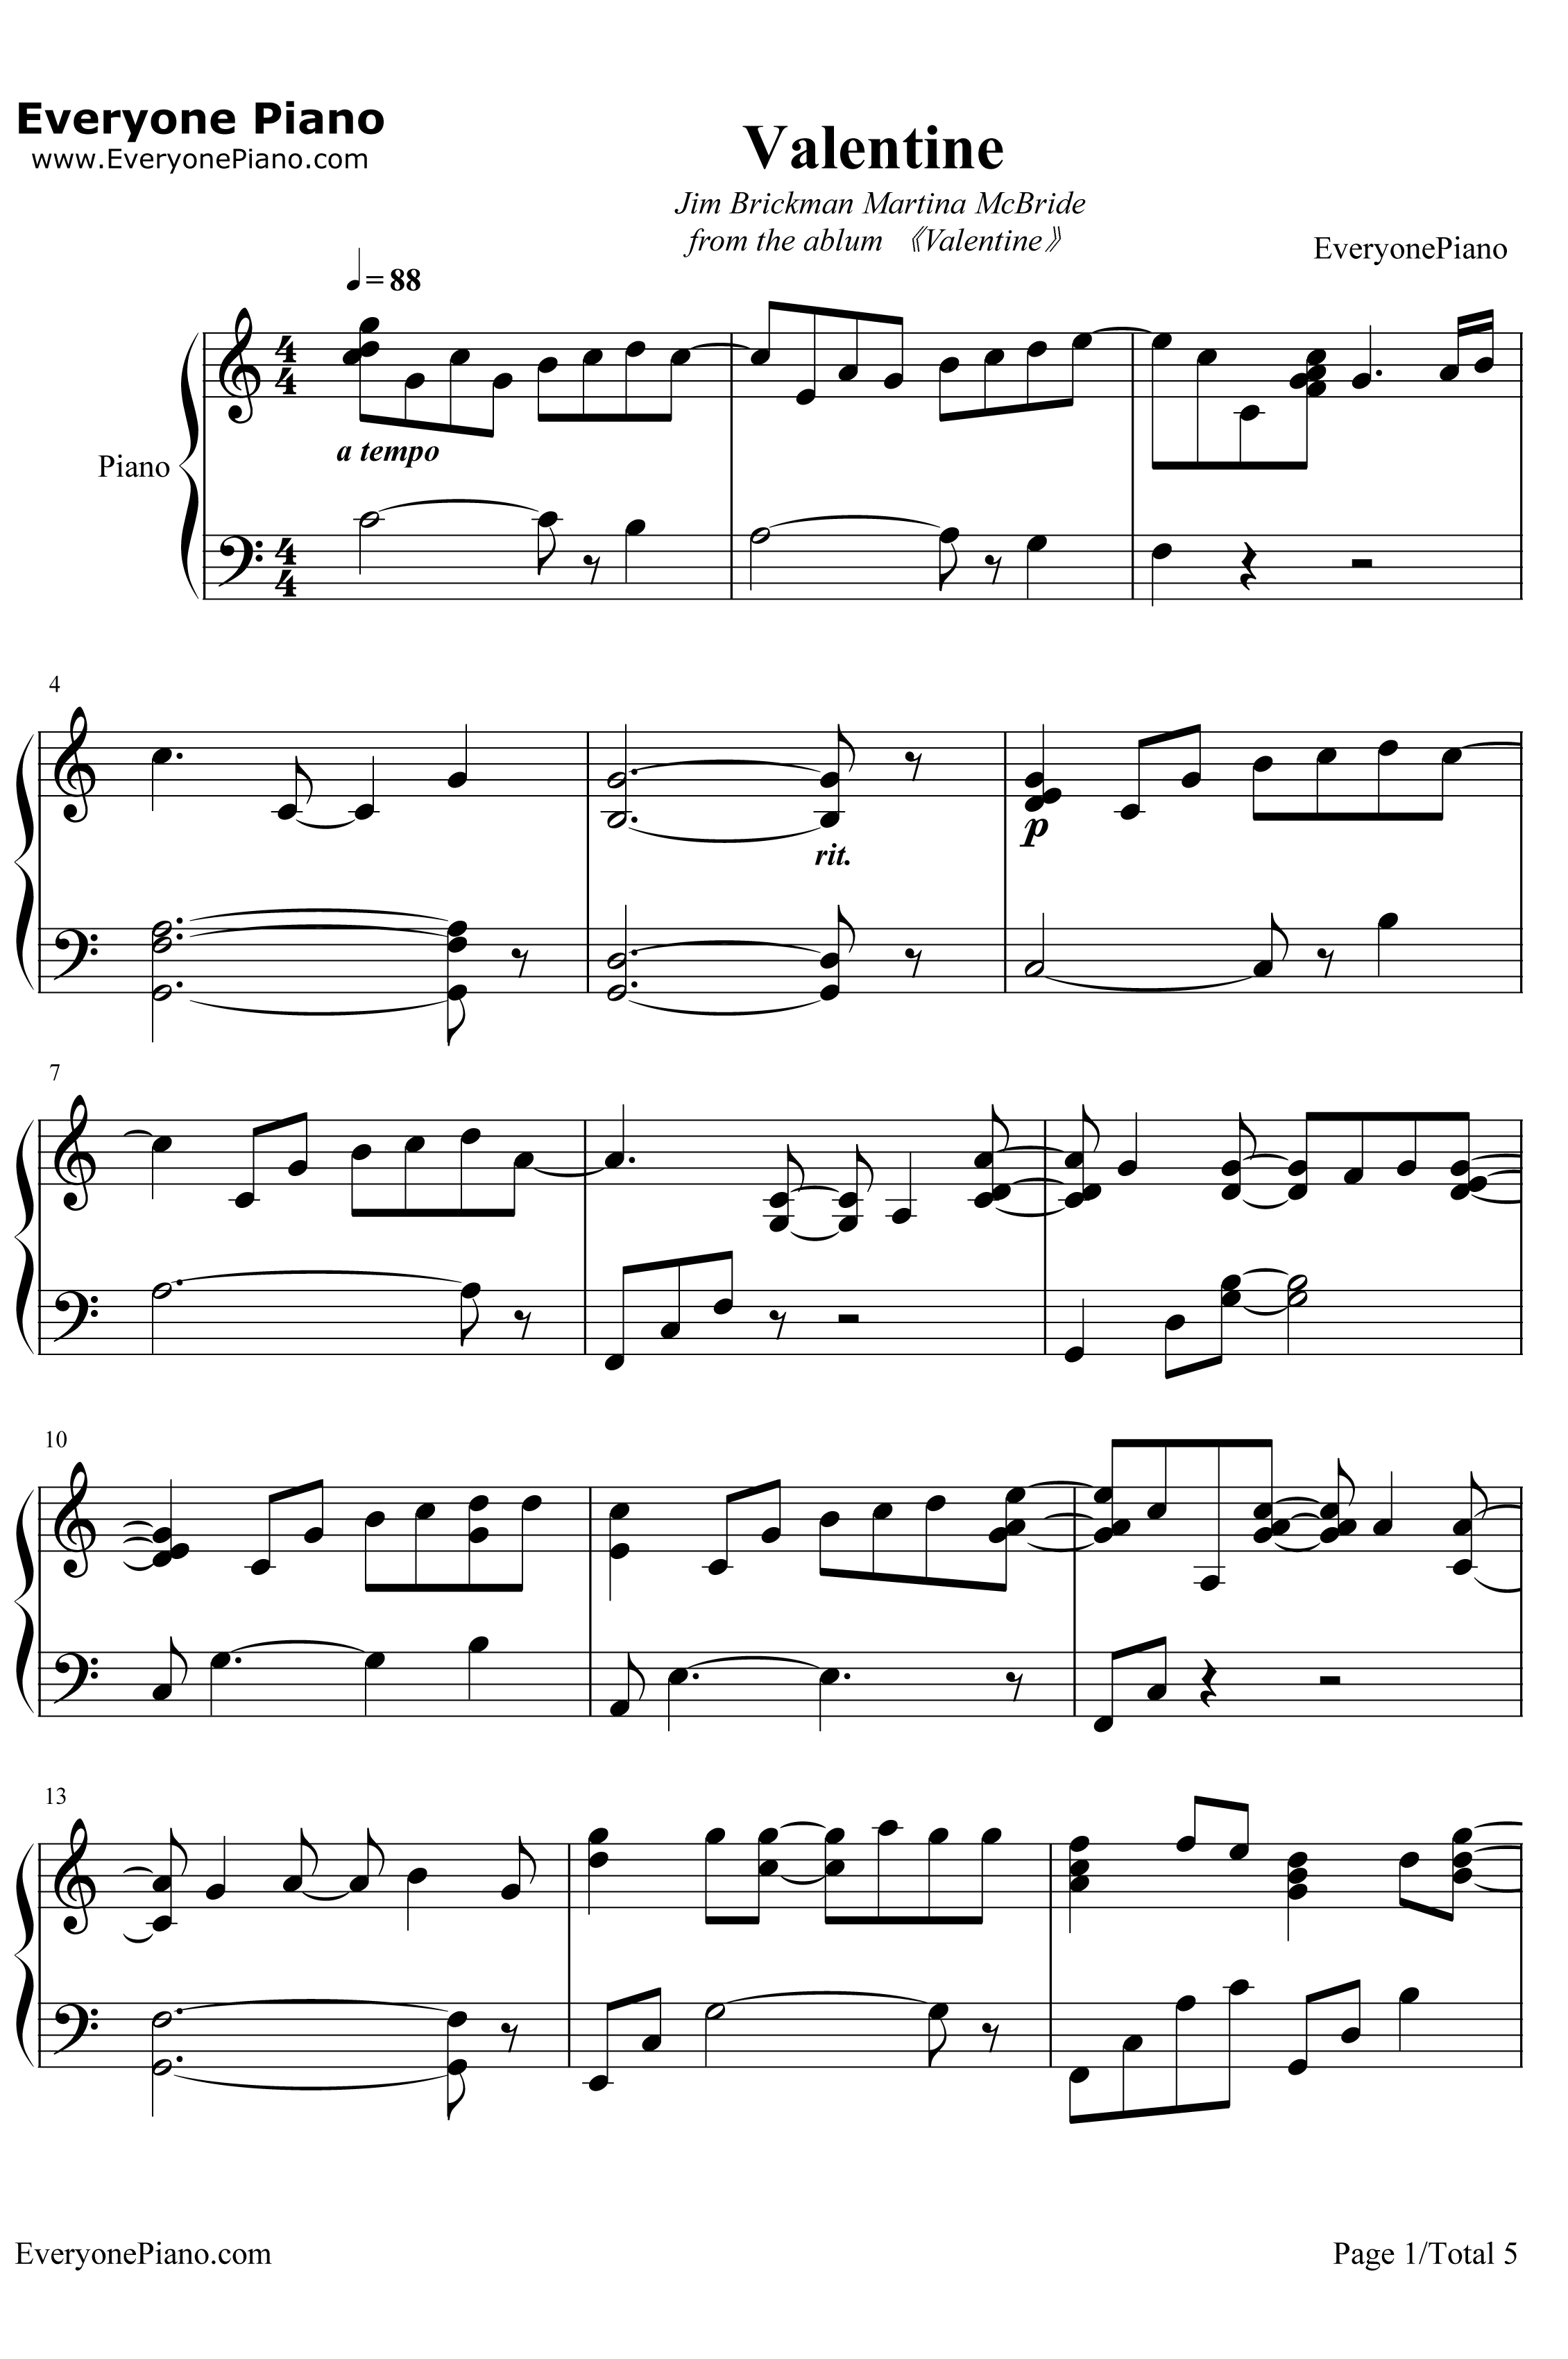 Valentine钢琴谱-JimBrickmanMartinaMcBride-JimBrickman和MartinaMcBride1